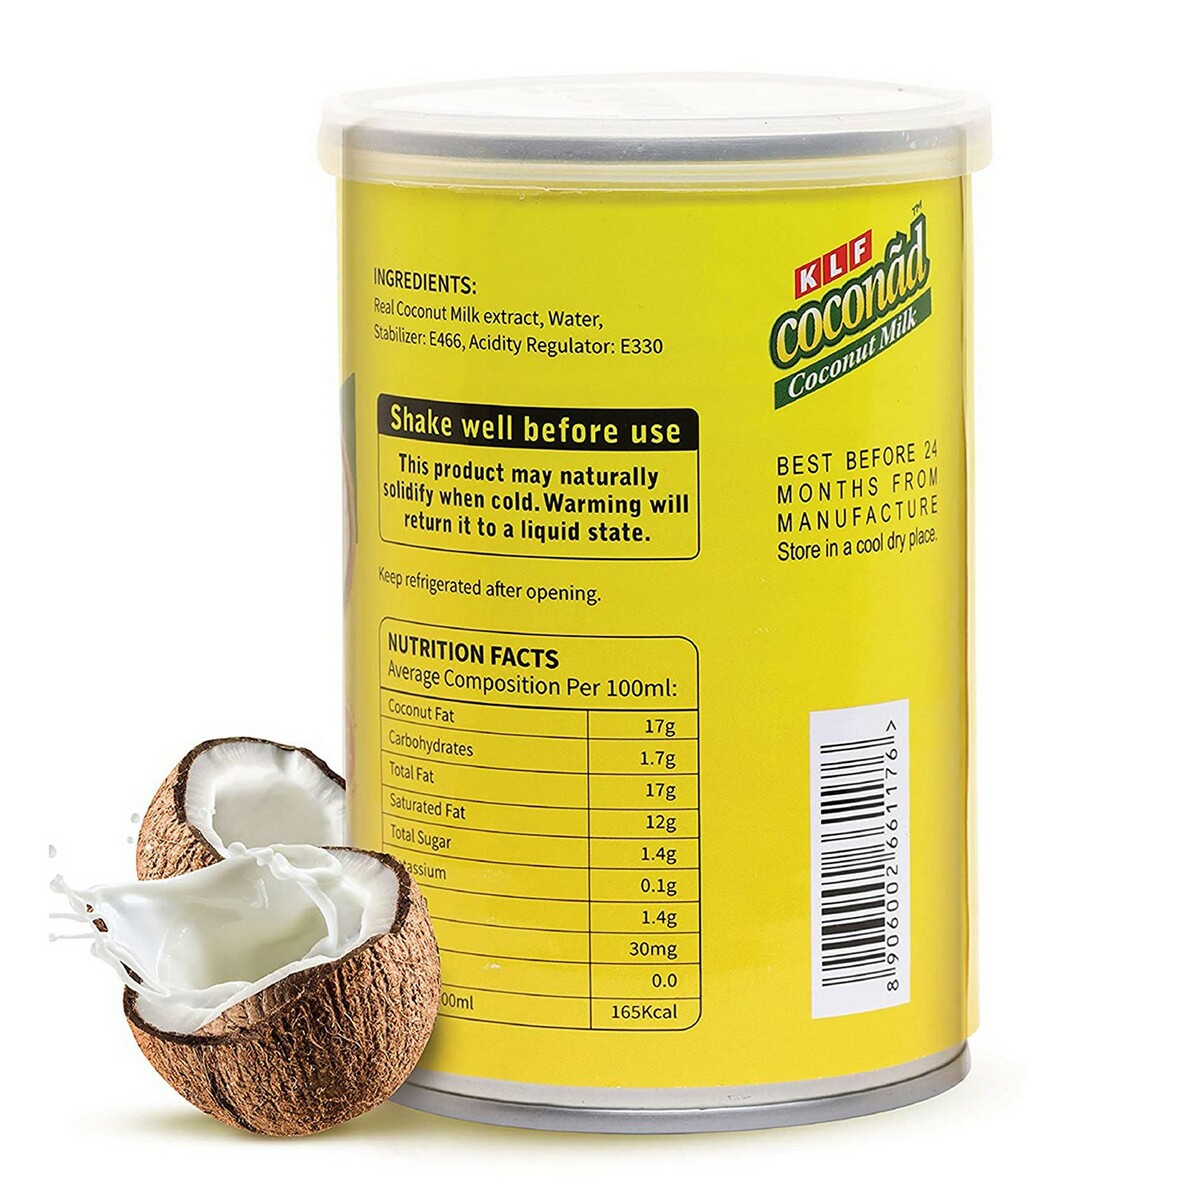 KLF Coconad Coconut Milk 400ml